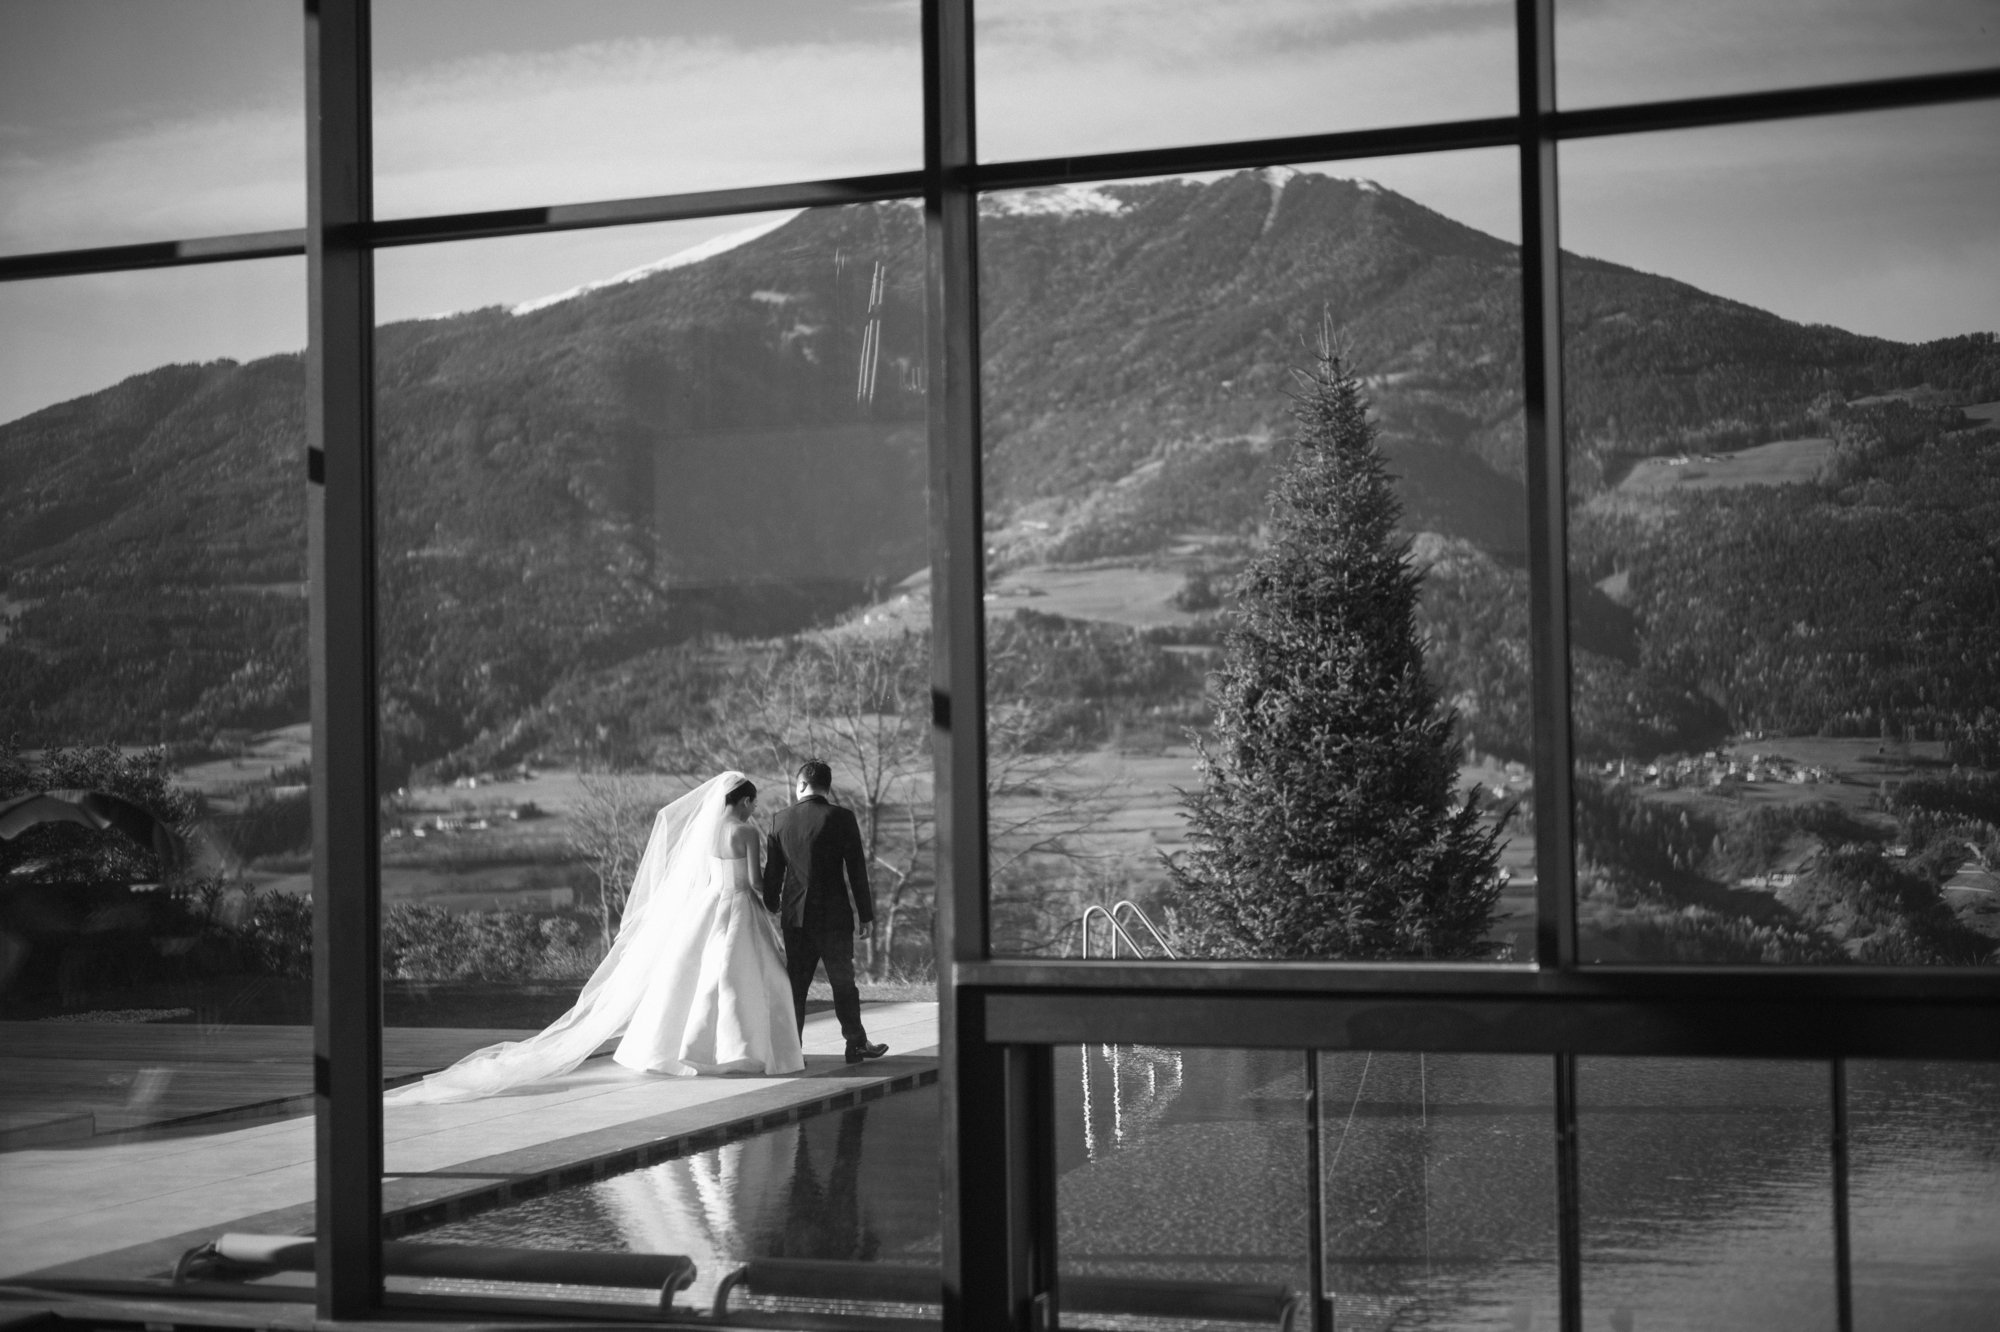 Prawira-Evelyn-Dolomites-Italy-Santre wedding-Yefta Gunawan-Jeriko MUA-Carol Kuntjoro Photography-91.jpg